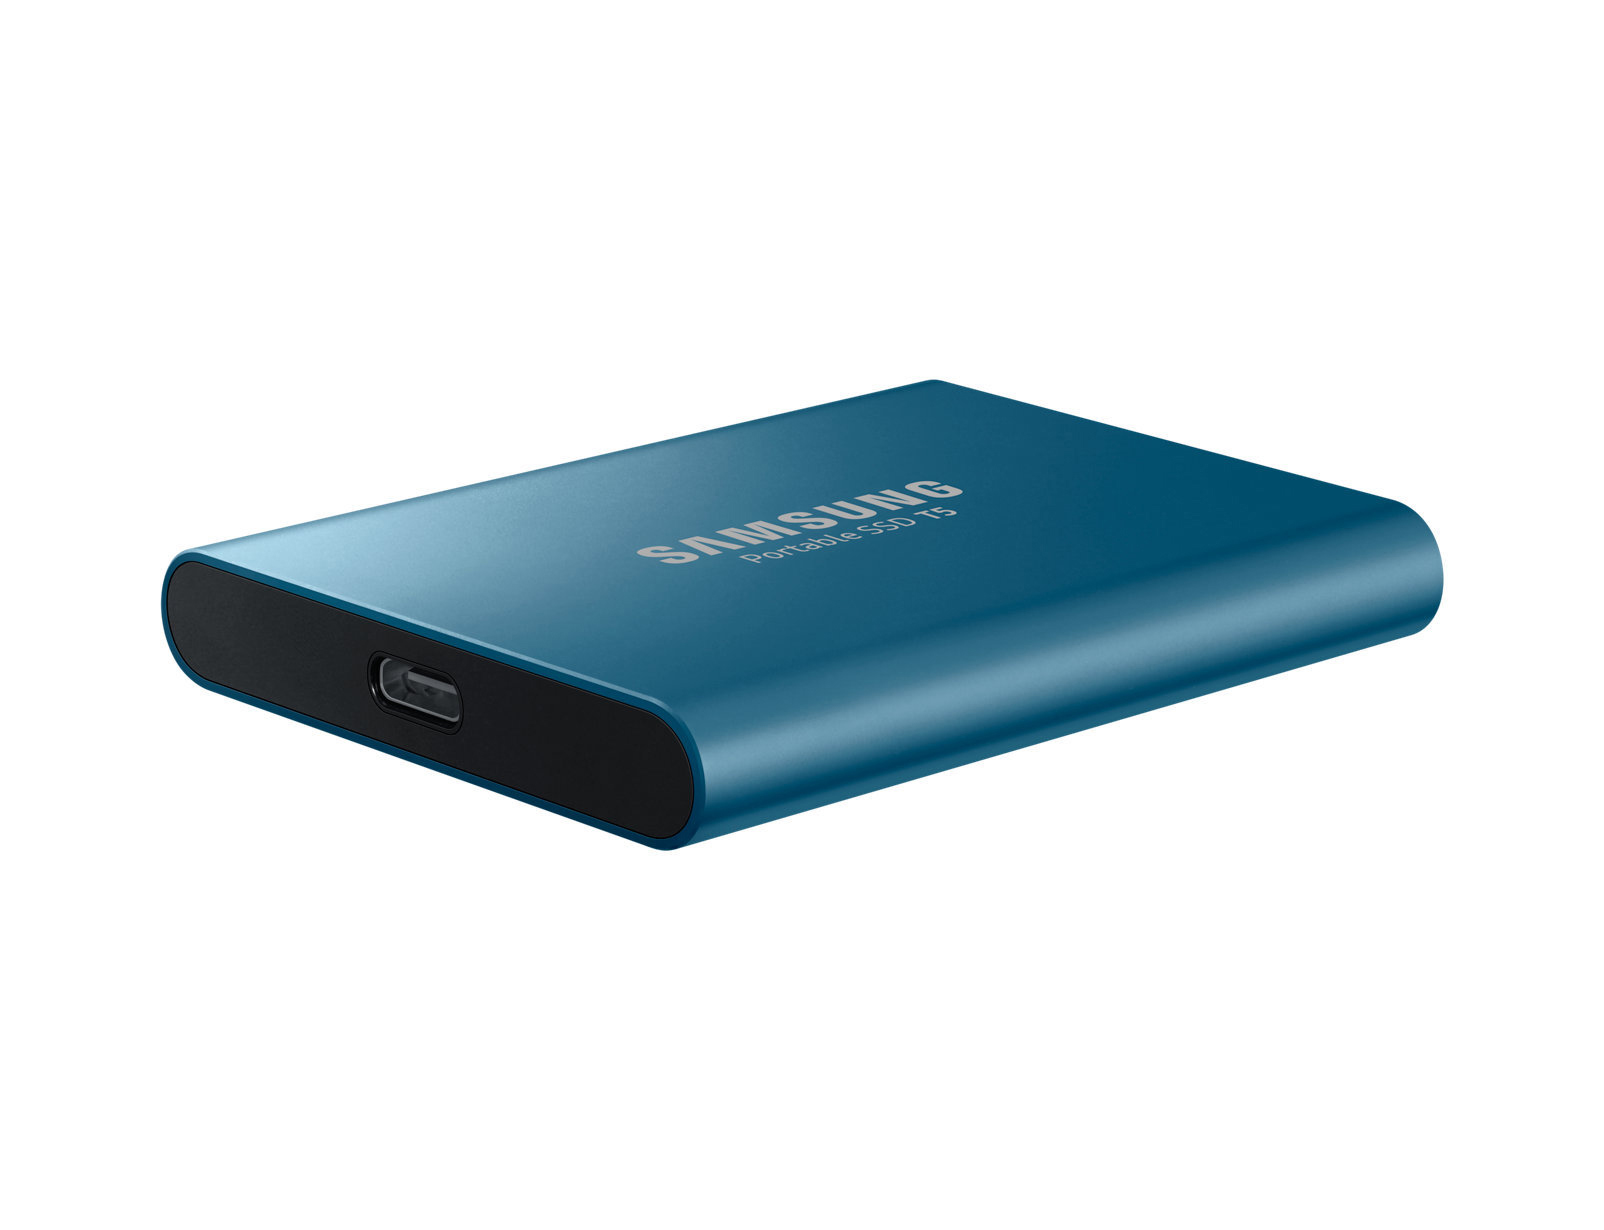 SAMSUNG Portable GB 2,5 250 SSD extern, T5 Blau Zoll, Festplatte, SSD